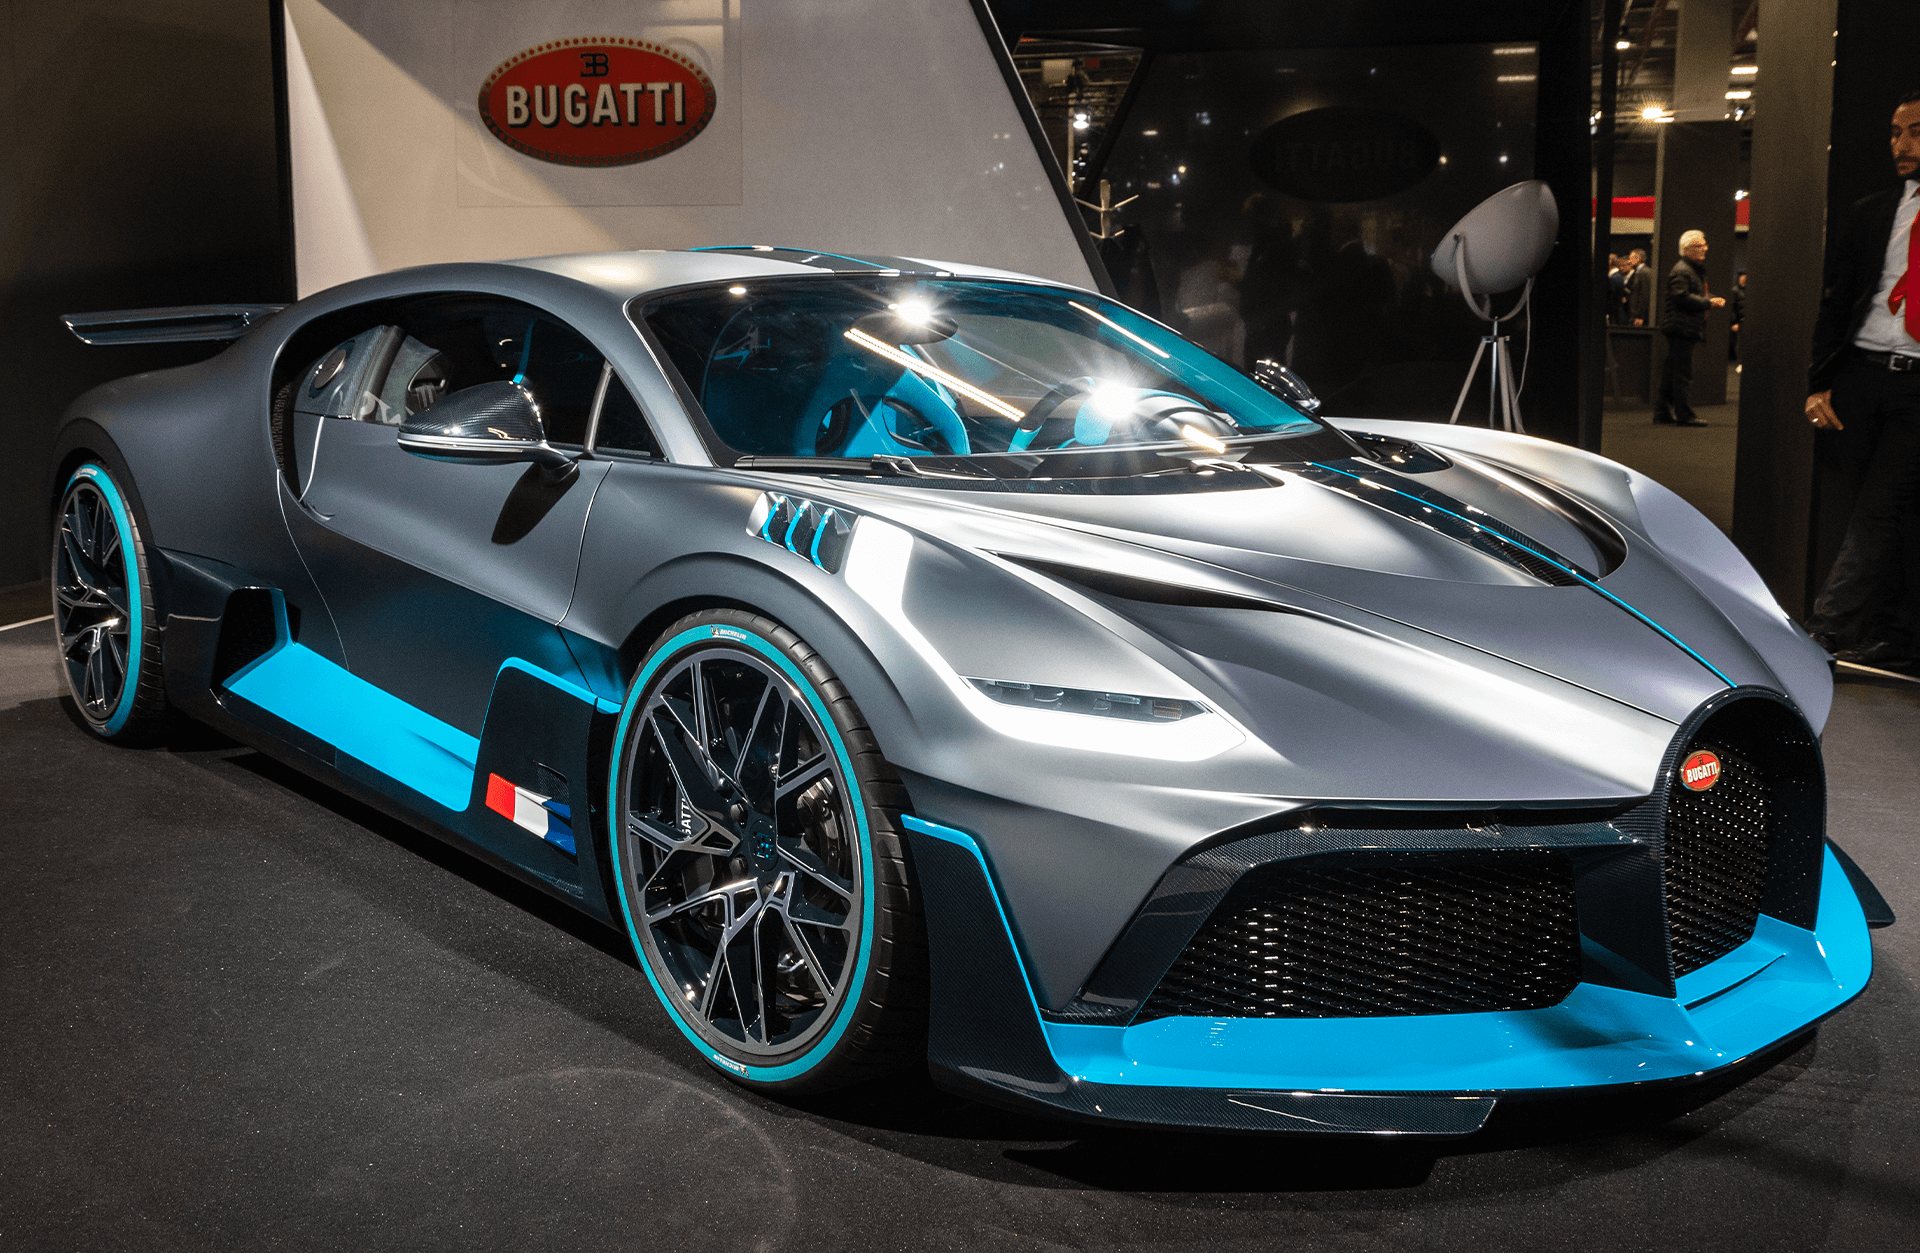 New 2020 Bugatti Divo extreme hypercar